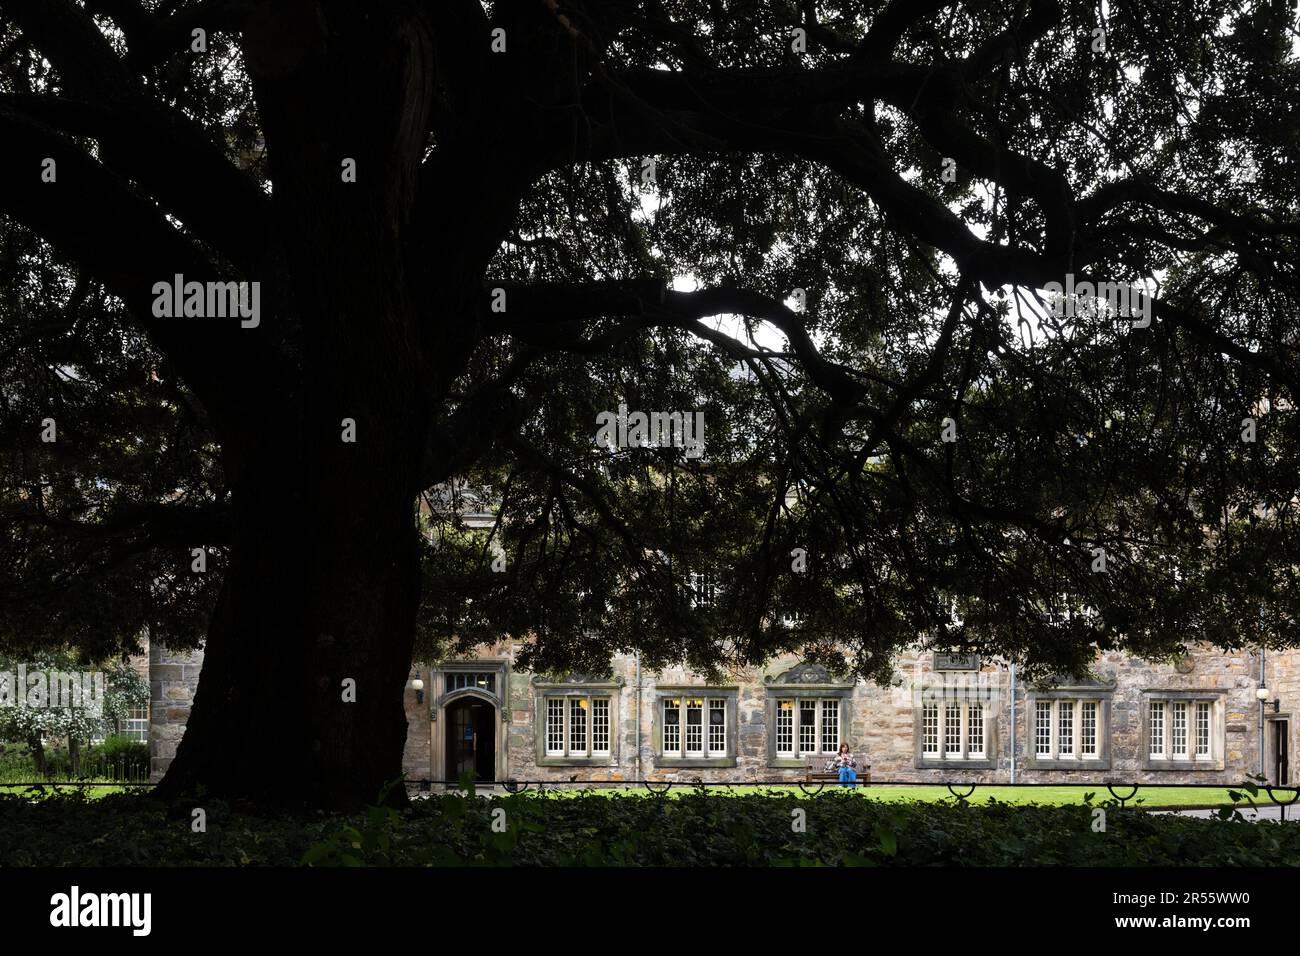 St Marys Quad Holm (sempreverde) quercia, St Marys College School of Divinity, St Andrews University, Scozia, Regno Unito Foto Stock